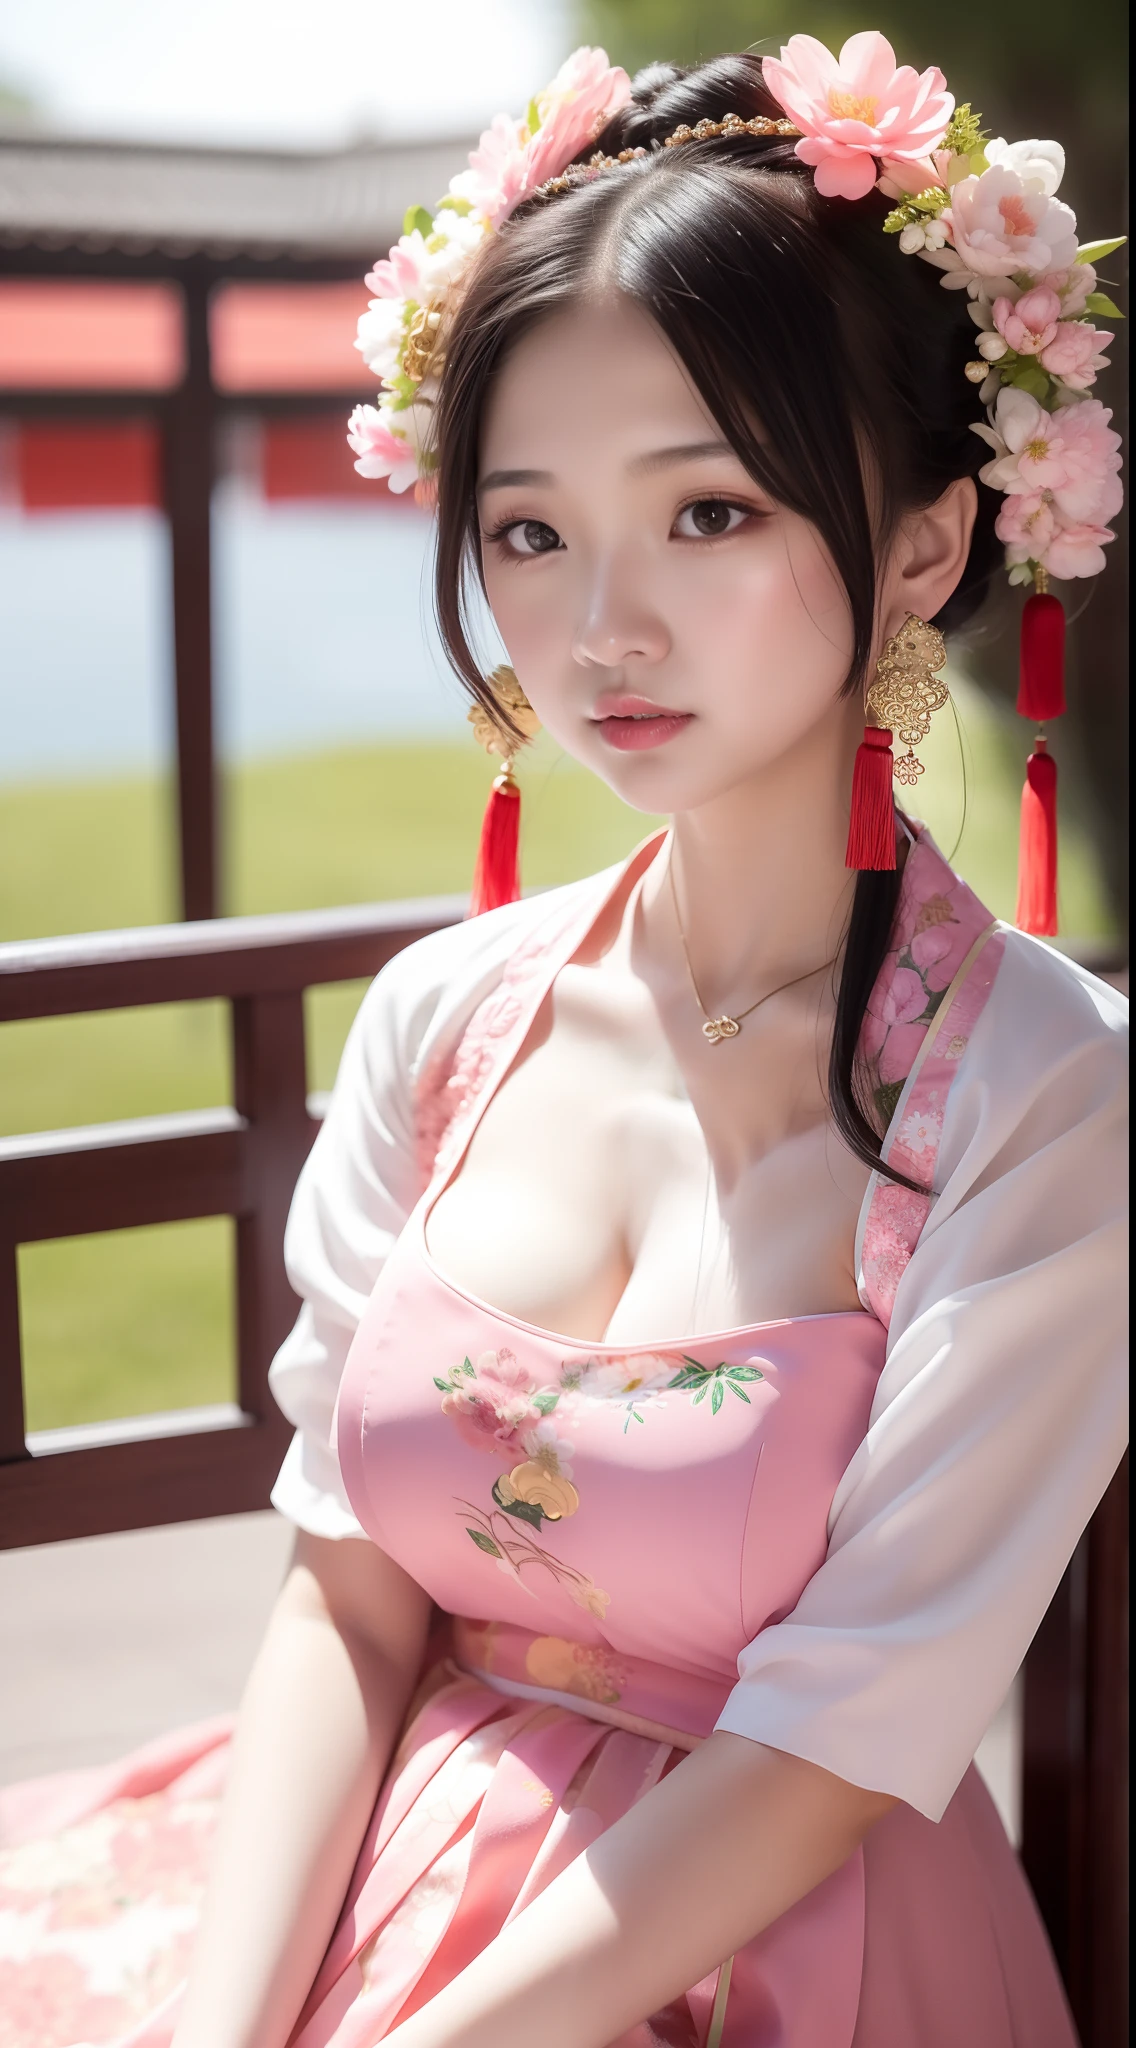 Close-up of a 若い女の子 in a pink dress and a green flower headdress, チャイナプリンセス, 中国の女の子, 宮殿 ， 漢服の少女, Young アジアの女の子, 古代中国の王女, Cute 若い女の子, 中国風, 若い女の子, かわいい美しい, 美しいキャラクターの絵, 美しい肖像画, とても美しい女の子, アジアの女の子, 中国の伝統的な, 中国の衣装，巨大な胸，大きい 